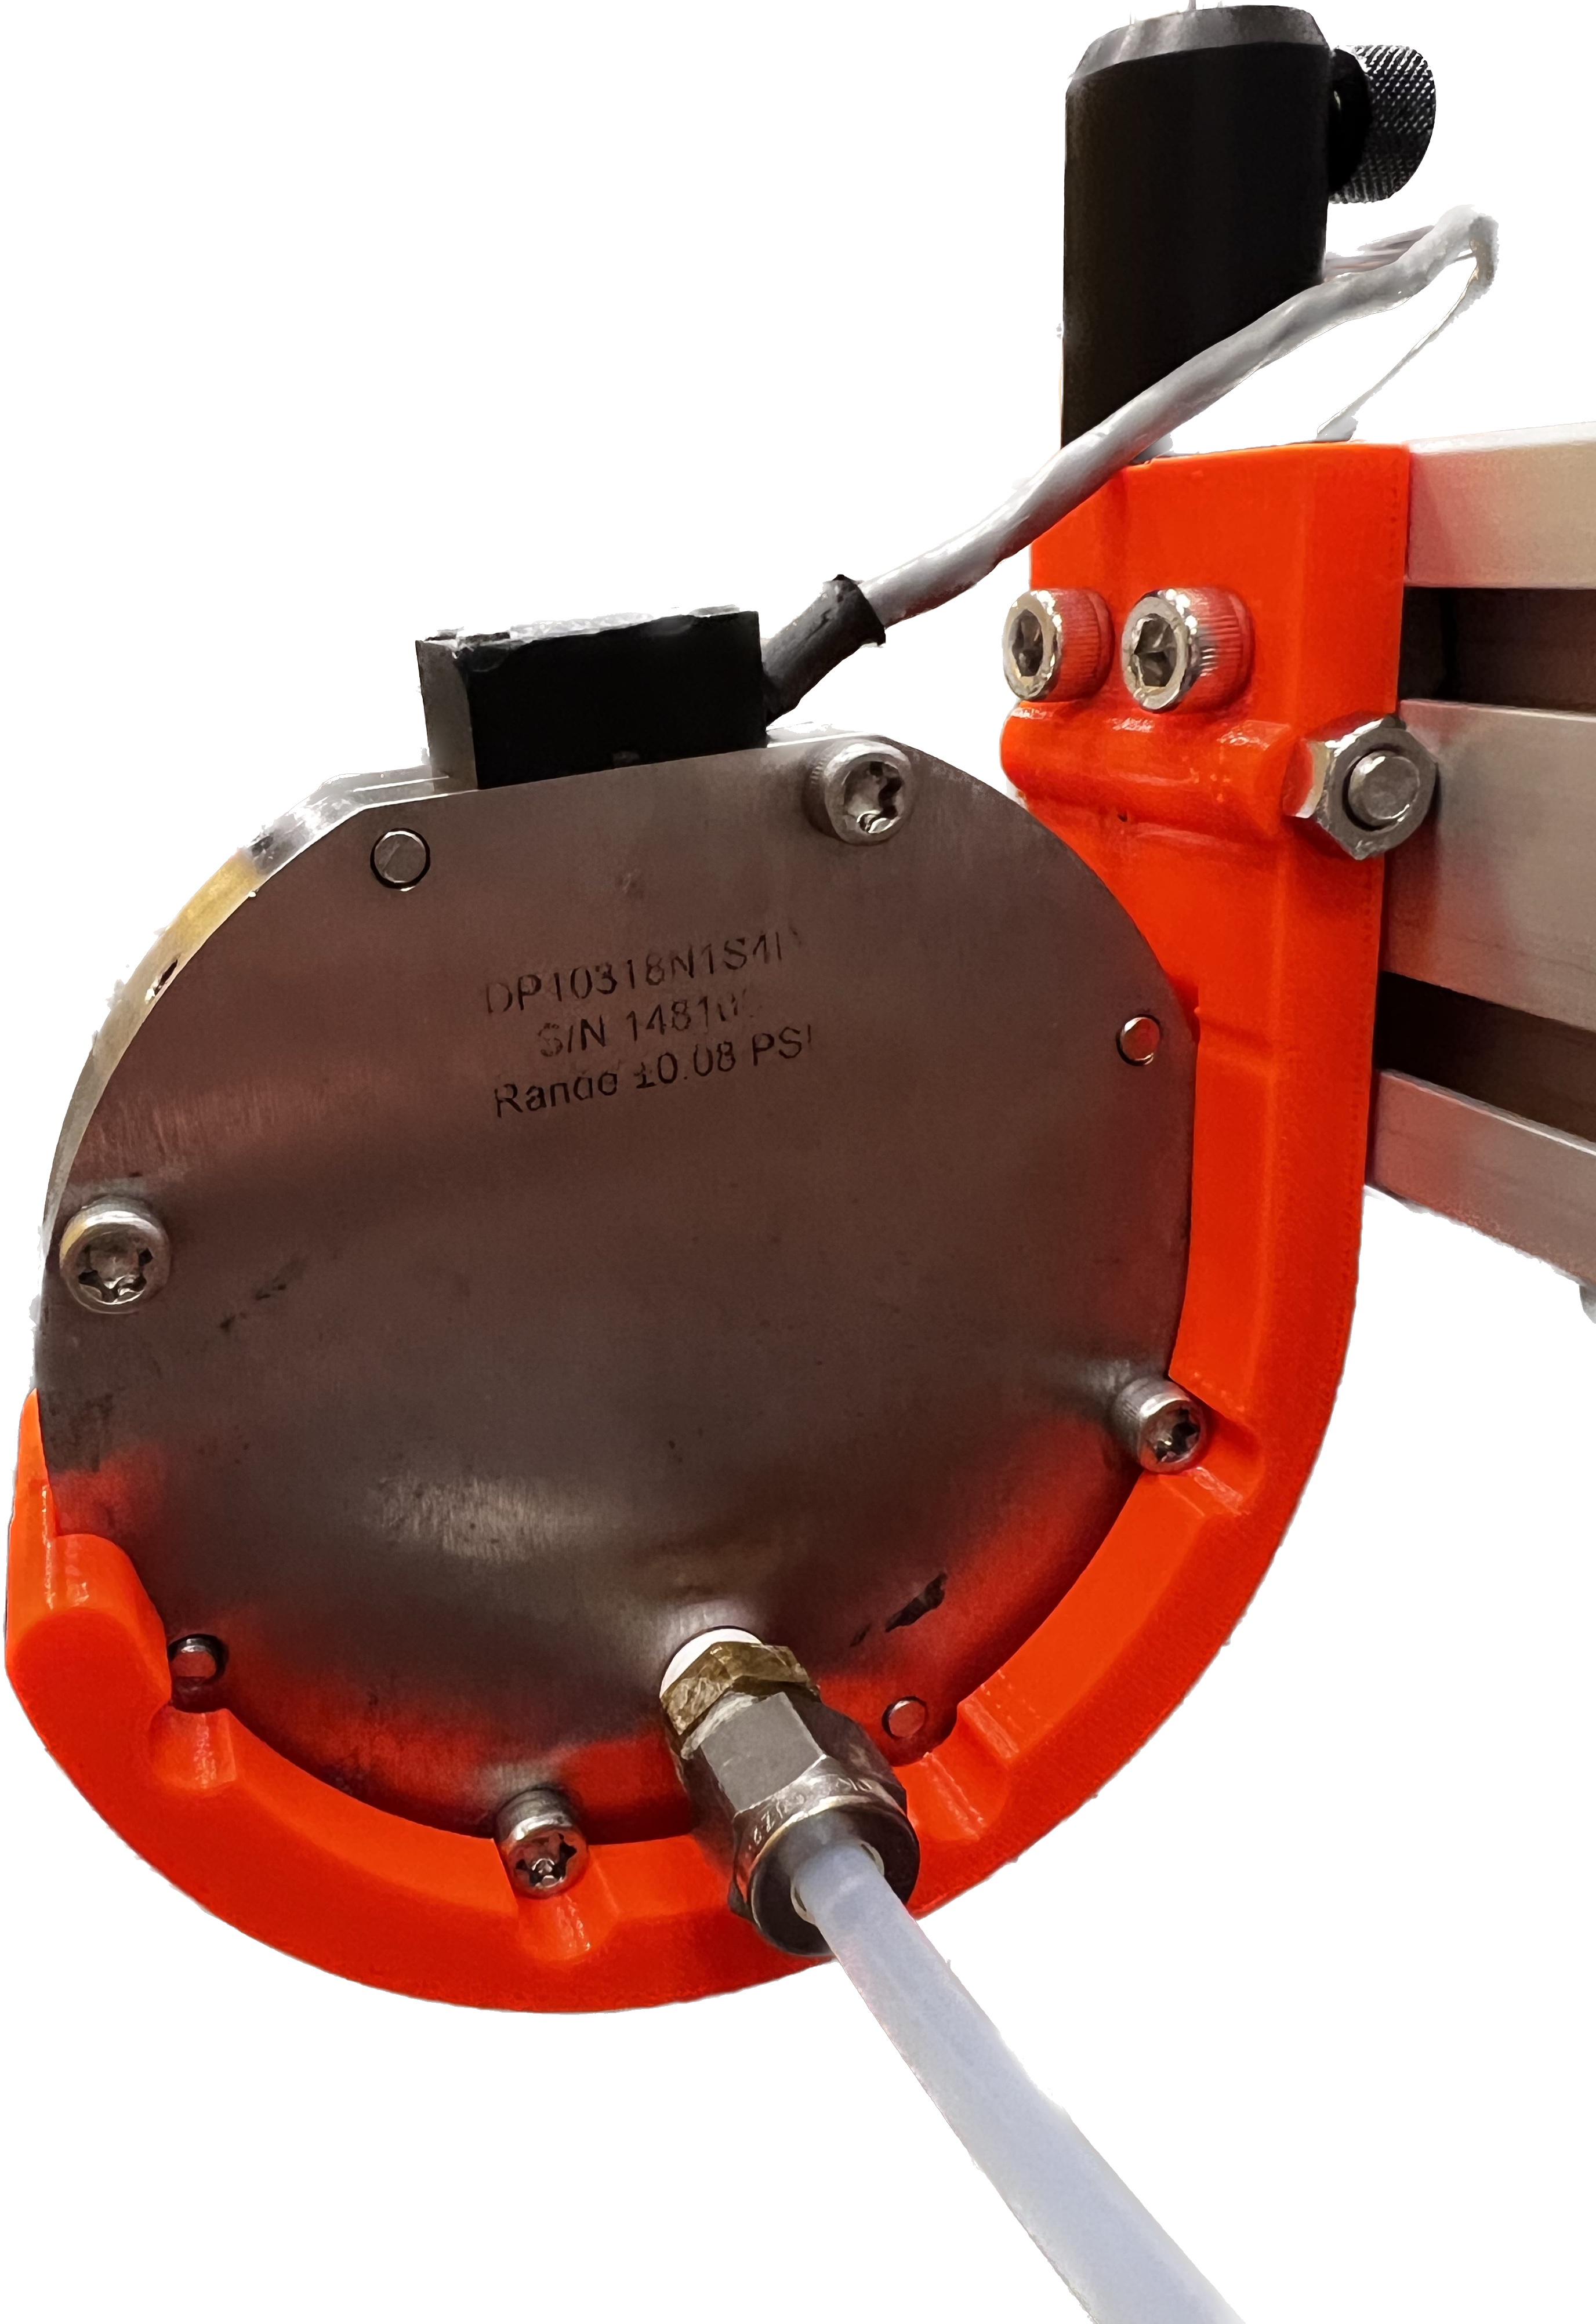 Validyne DP103 Pressure Sensor Mount by Flondy | Download free STL ...